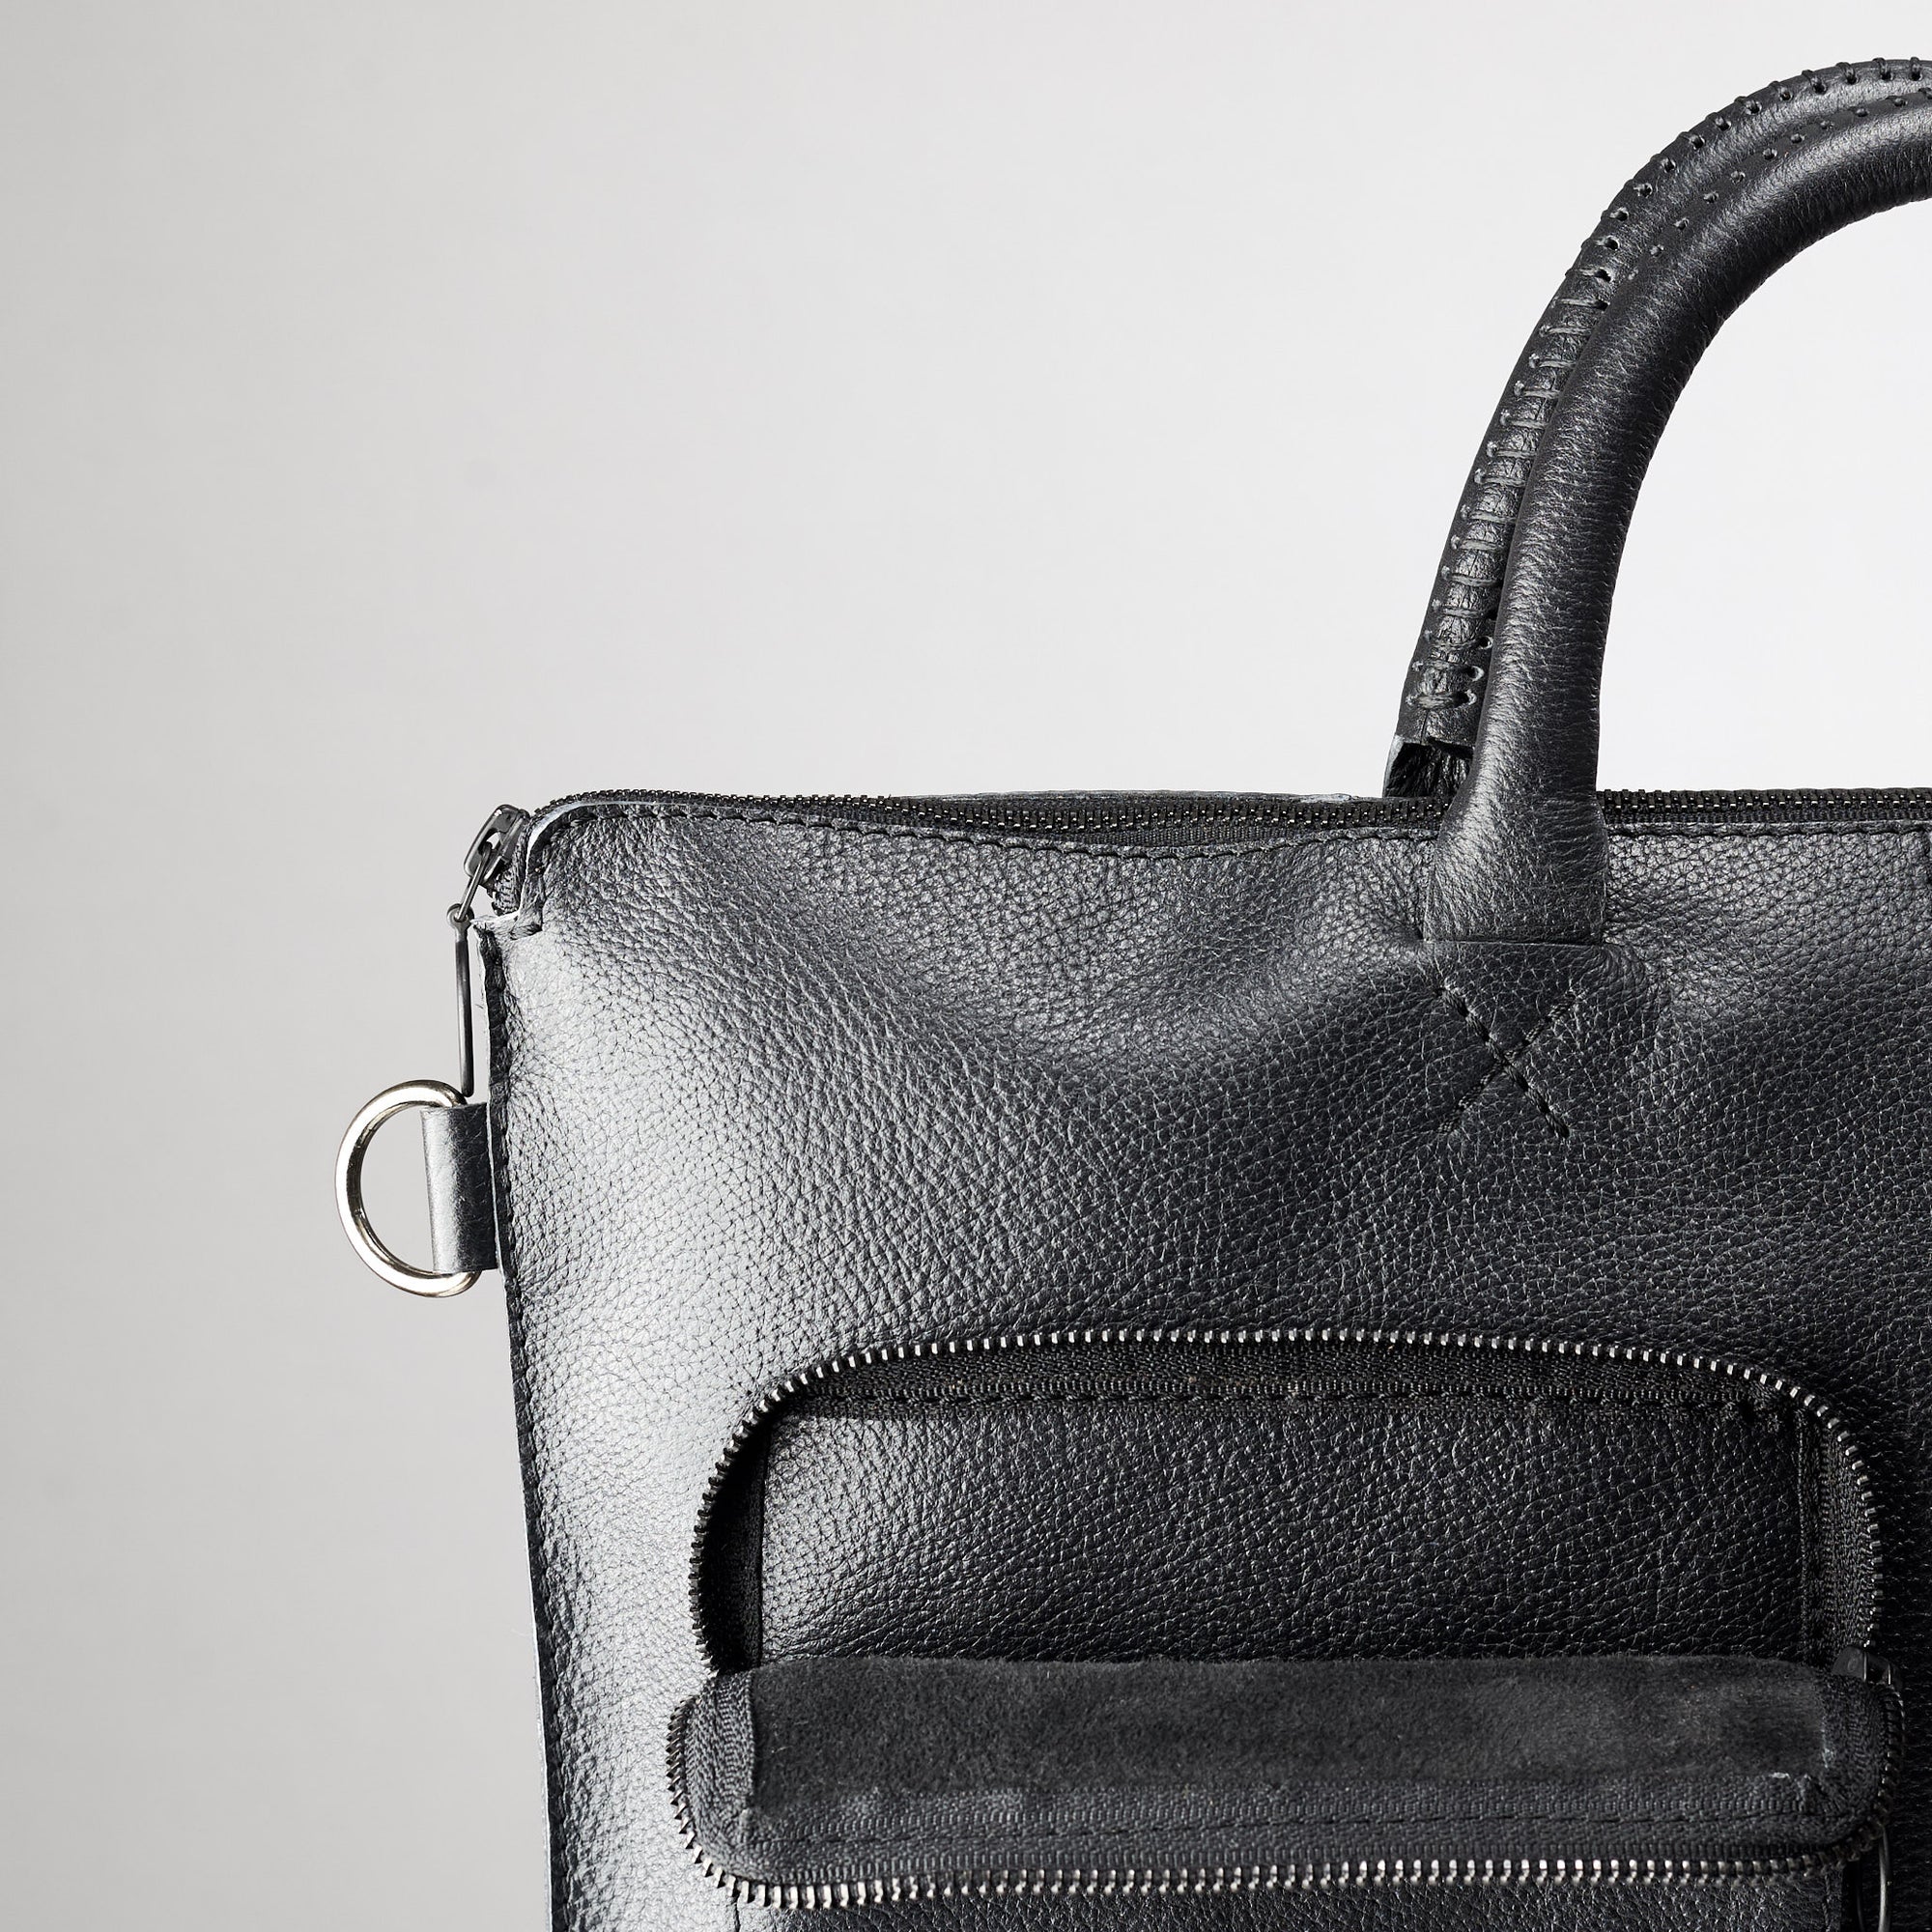 Suede pocket detail. Black tote zipper bag by Capra Leather. Handmade men work bag.